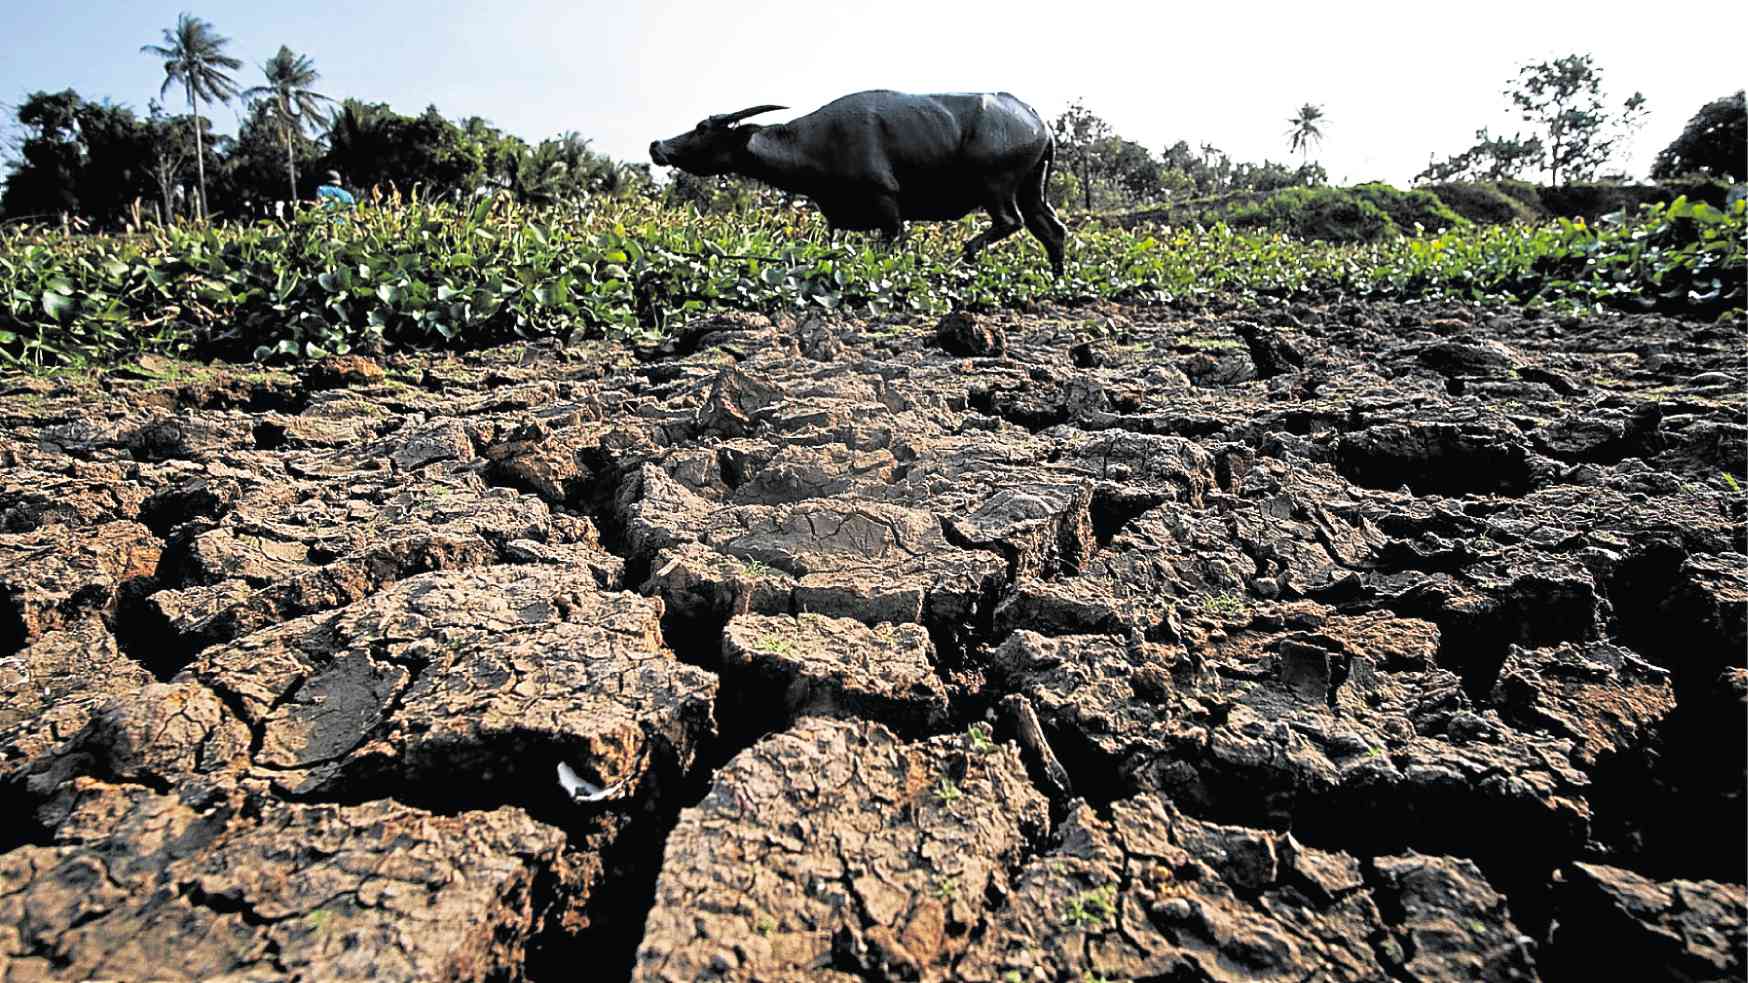 Nearly P8 billion worth of agri yields lost to El Niño – DA